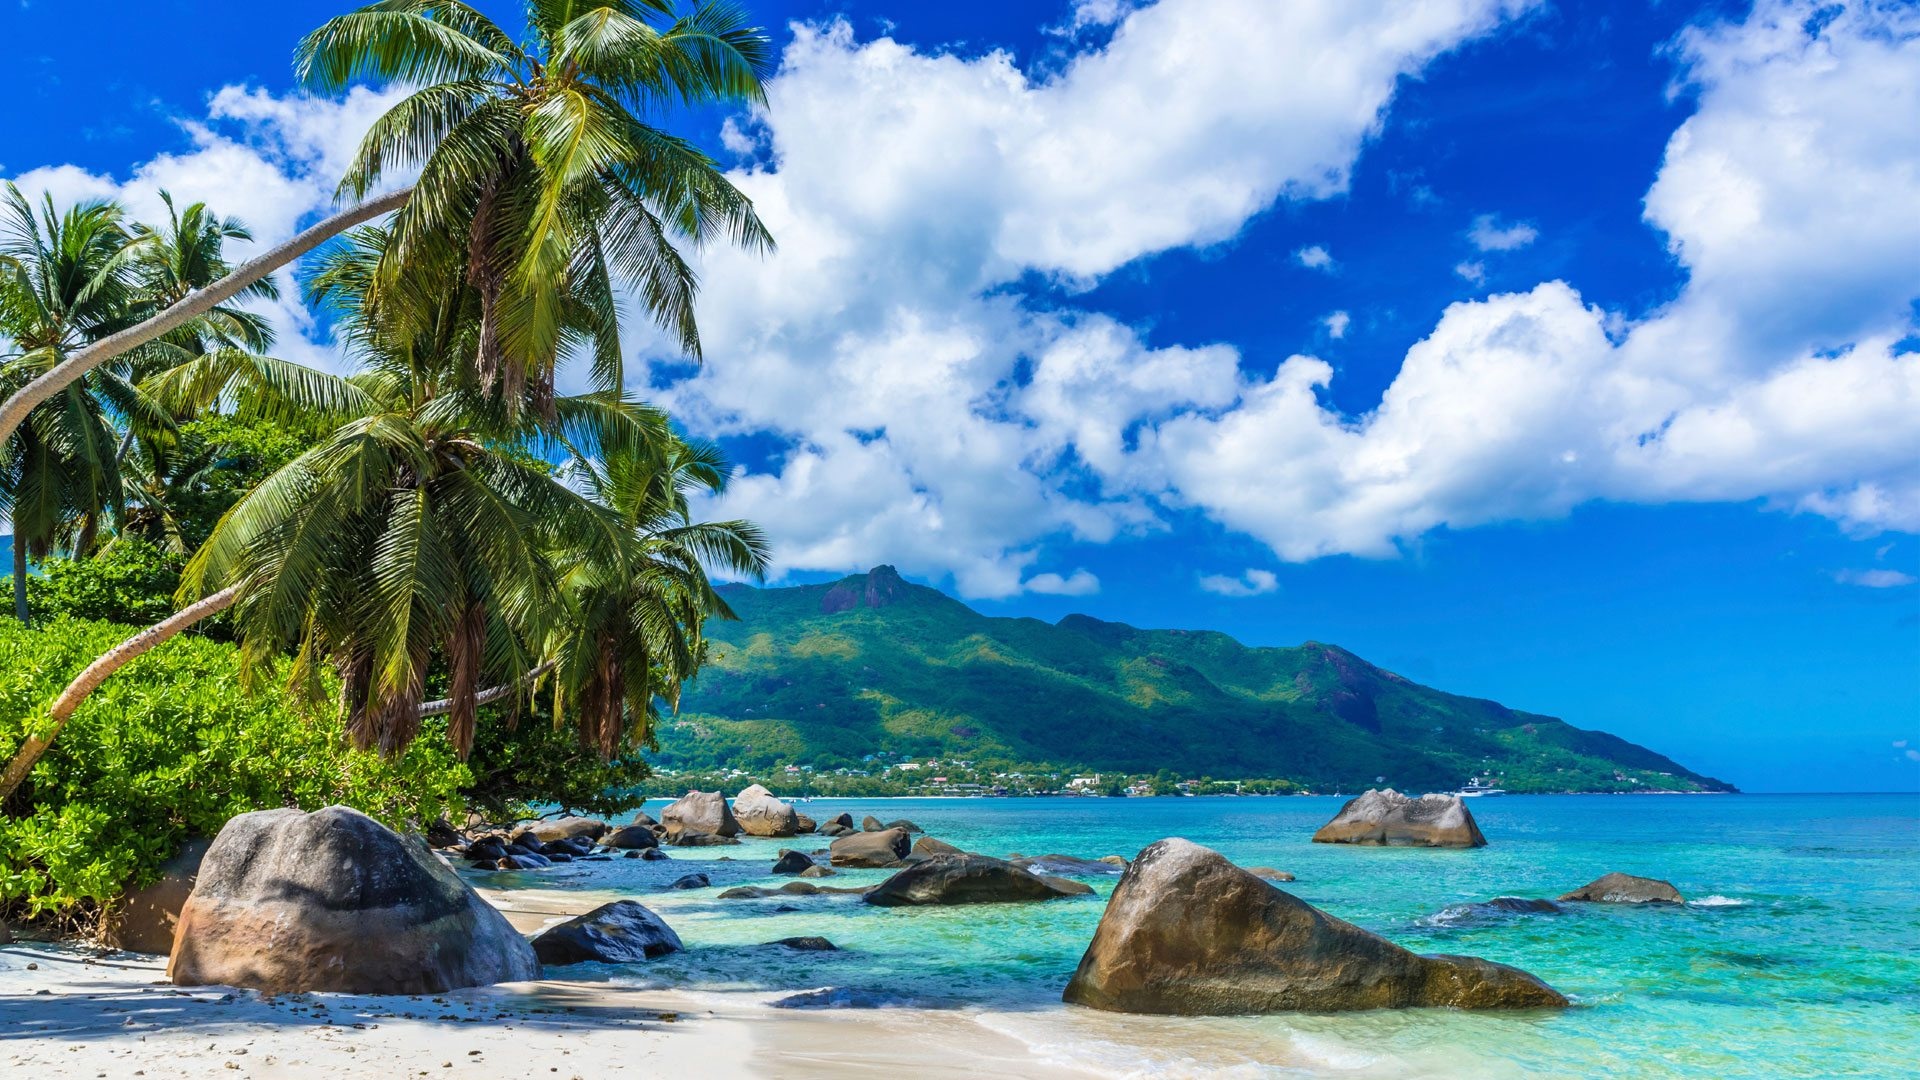 Seychelles accommodation, Top luxury stays, AndBeyond hotels, Pristine beaches, 1920x1080 Full HD Desktop